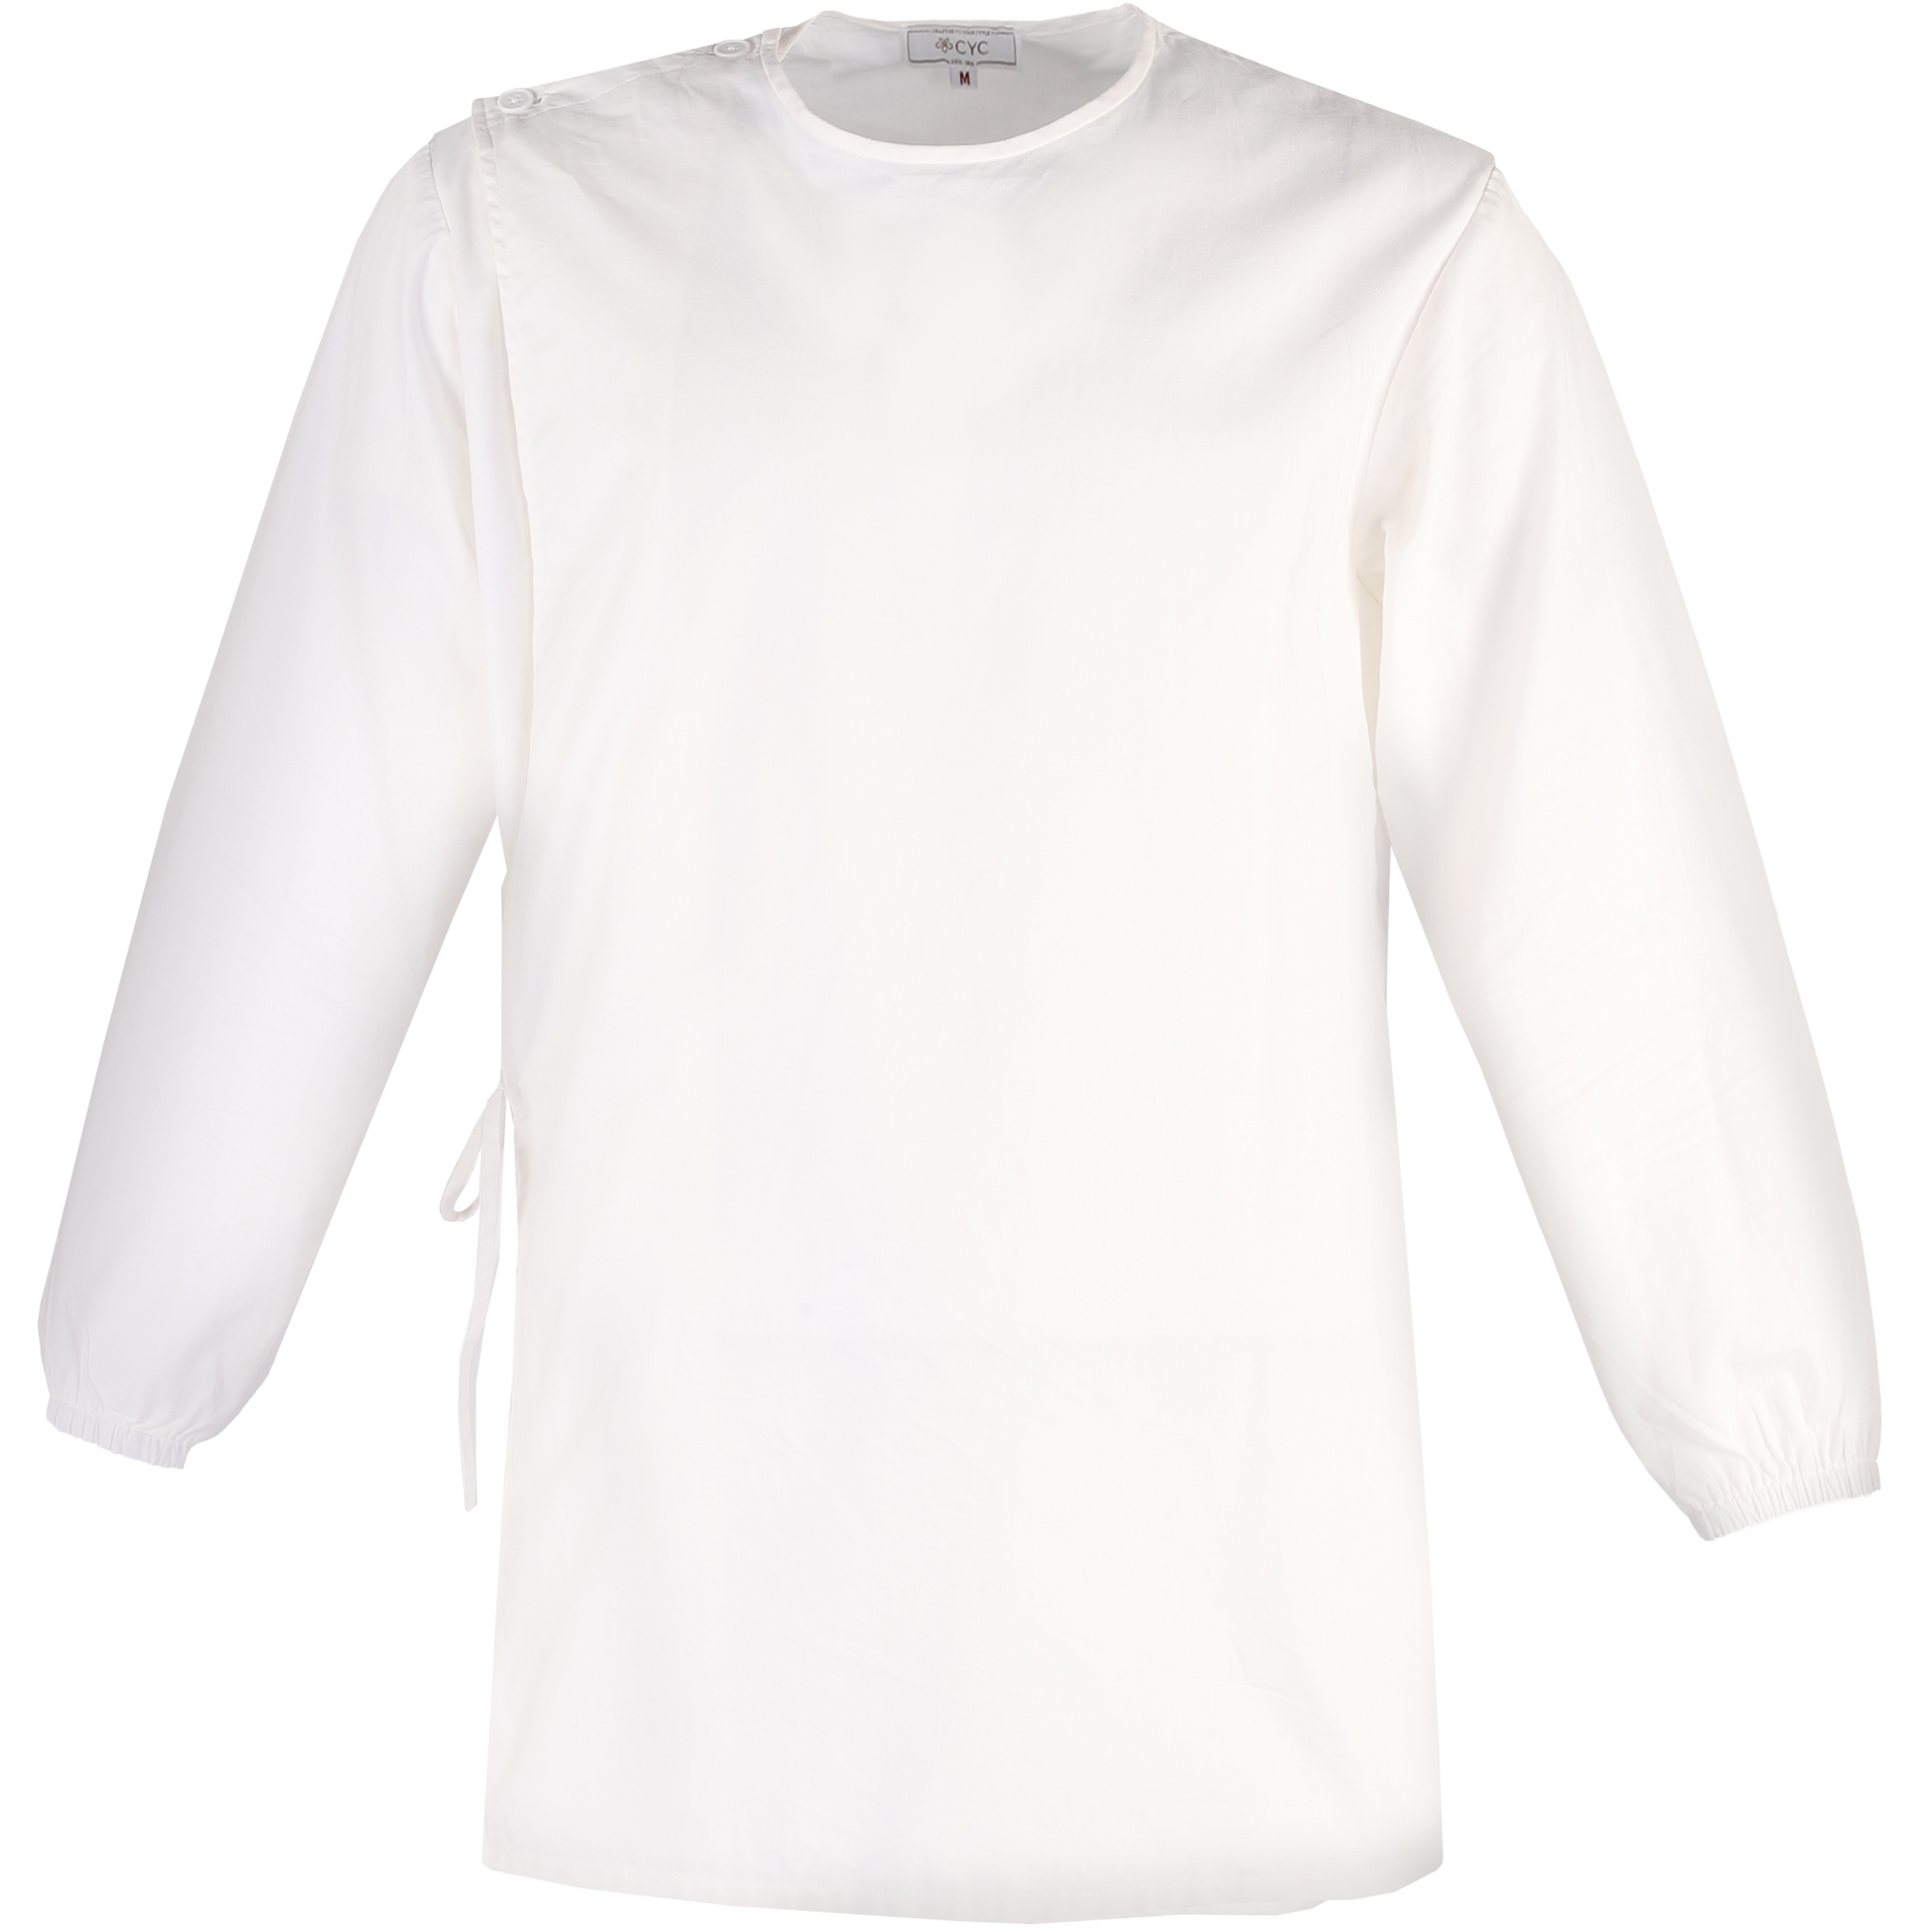 White Cotton Inpatient Adaptive Pyjama Top — Hospital & Nursing Home uniforms by CYC